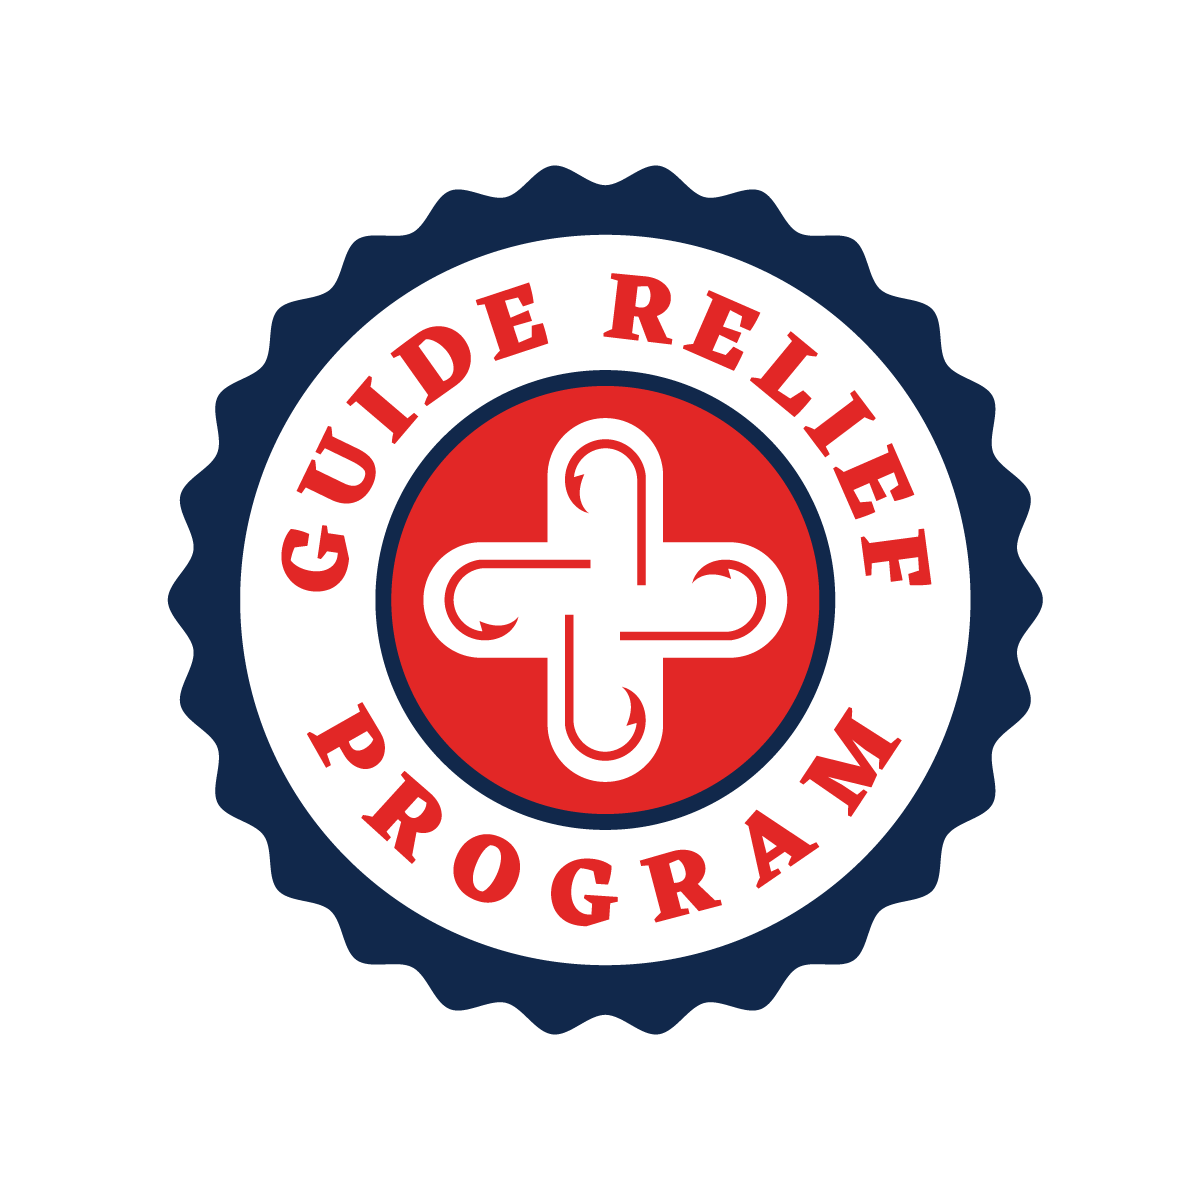 Guide Relief Program